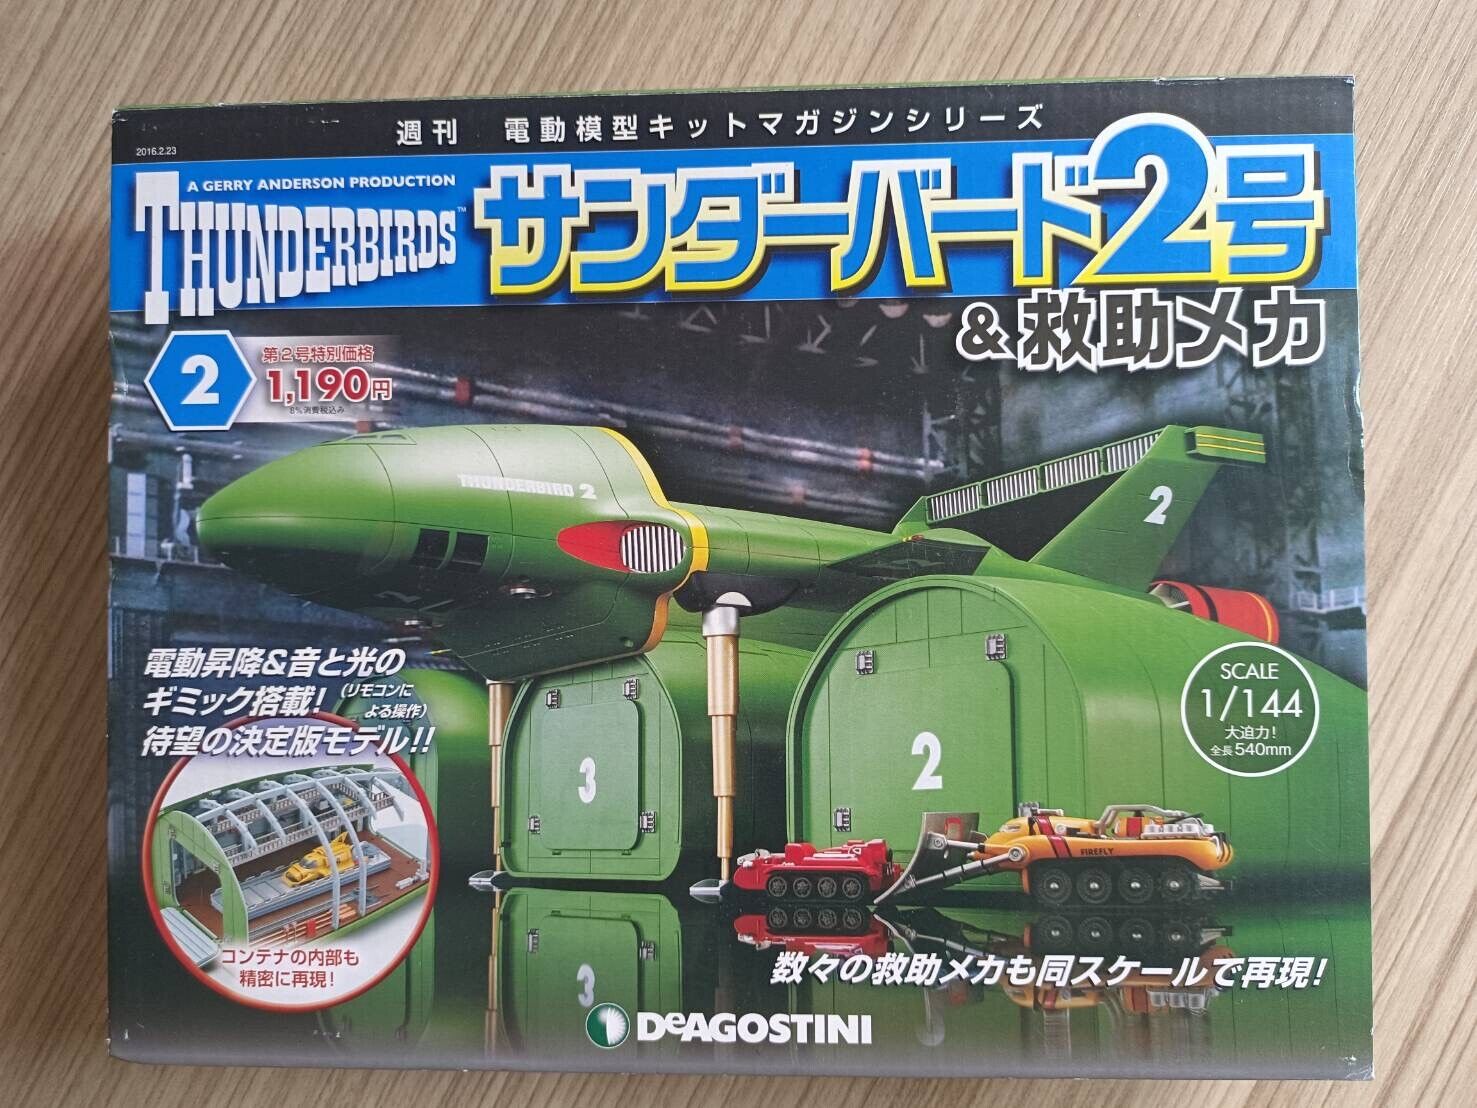 Issue #2: Thunderbirds TB-2 1/144 Scale Model Kit: DeAgostini Build Japan Weekly